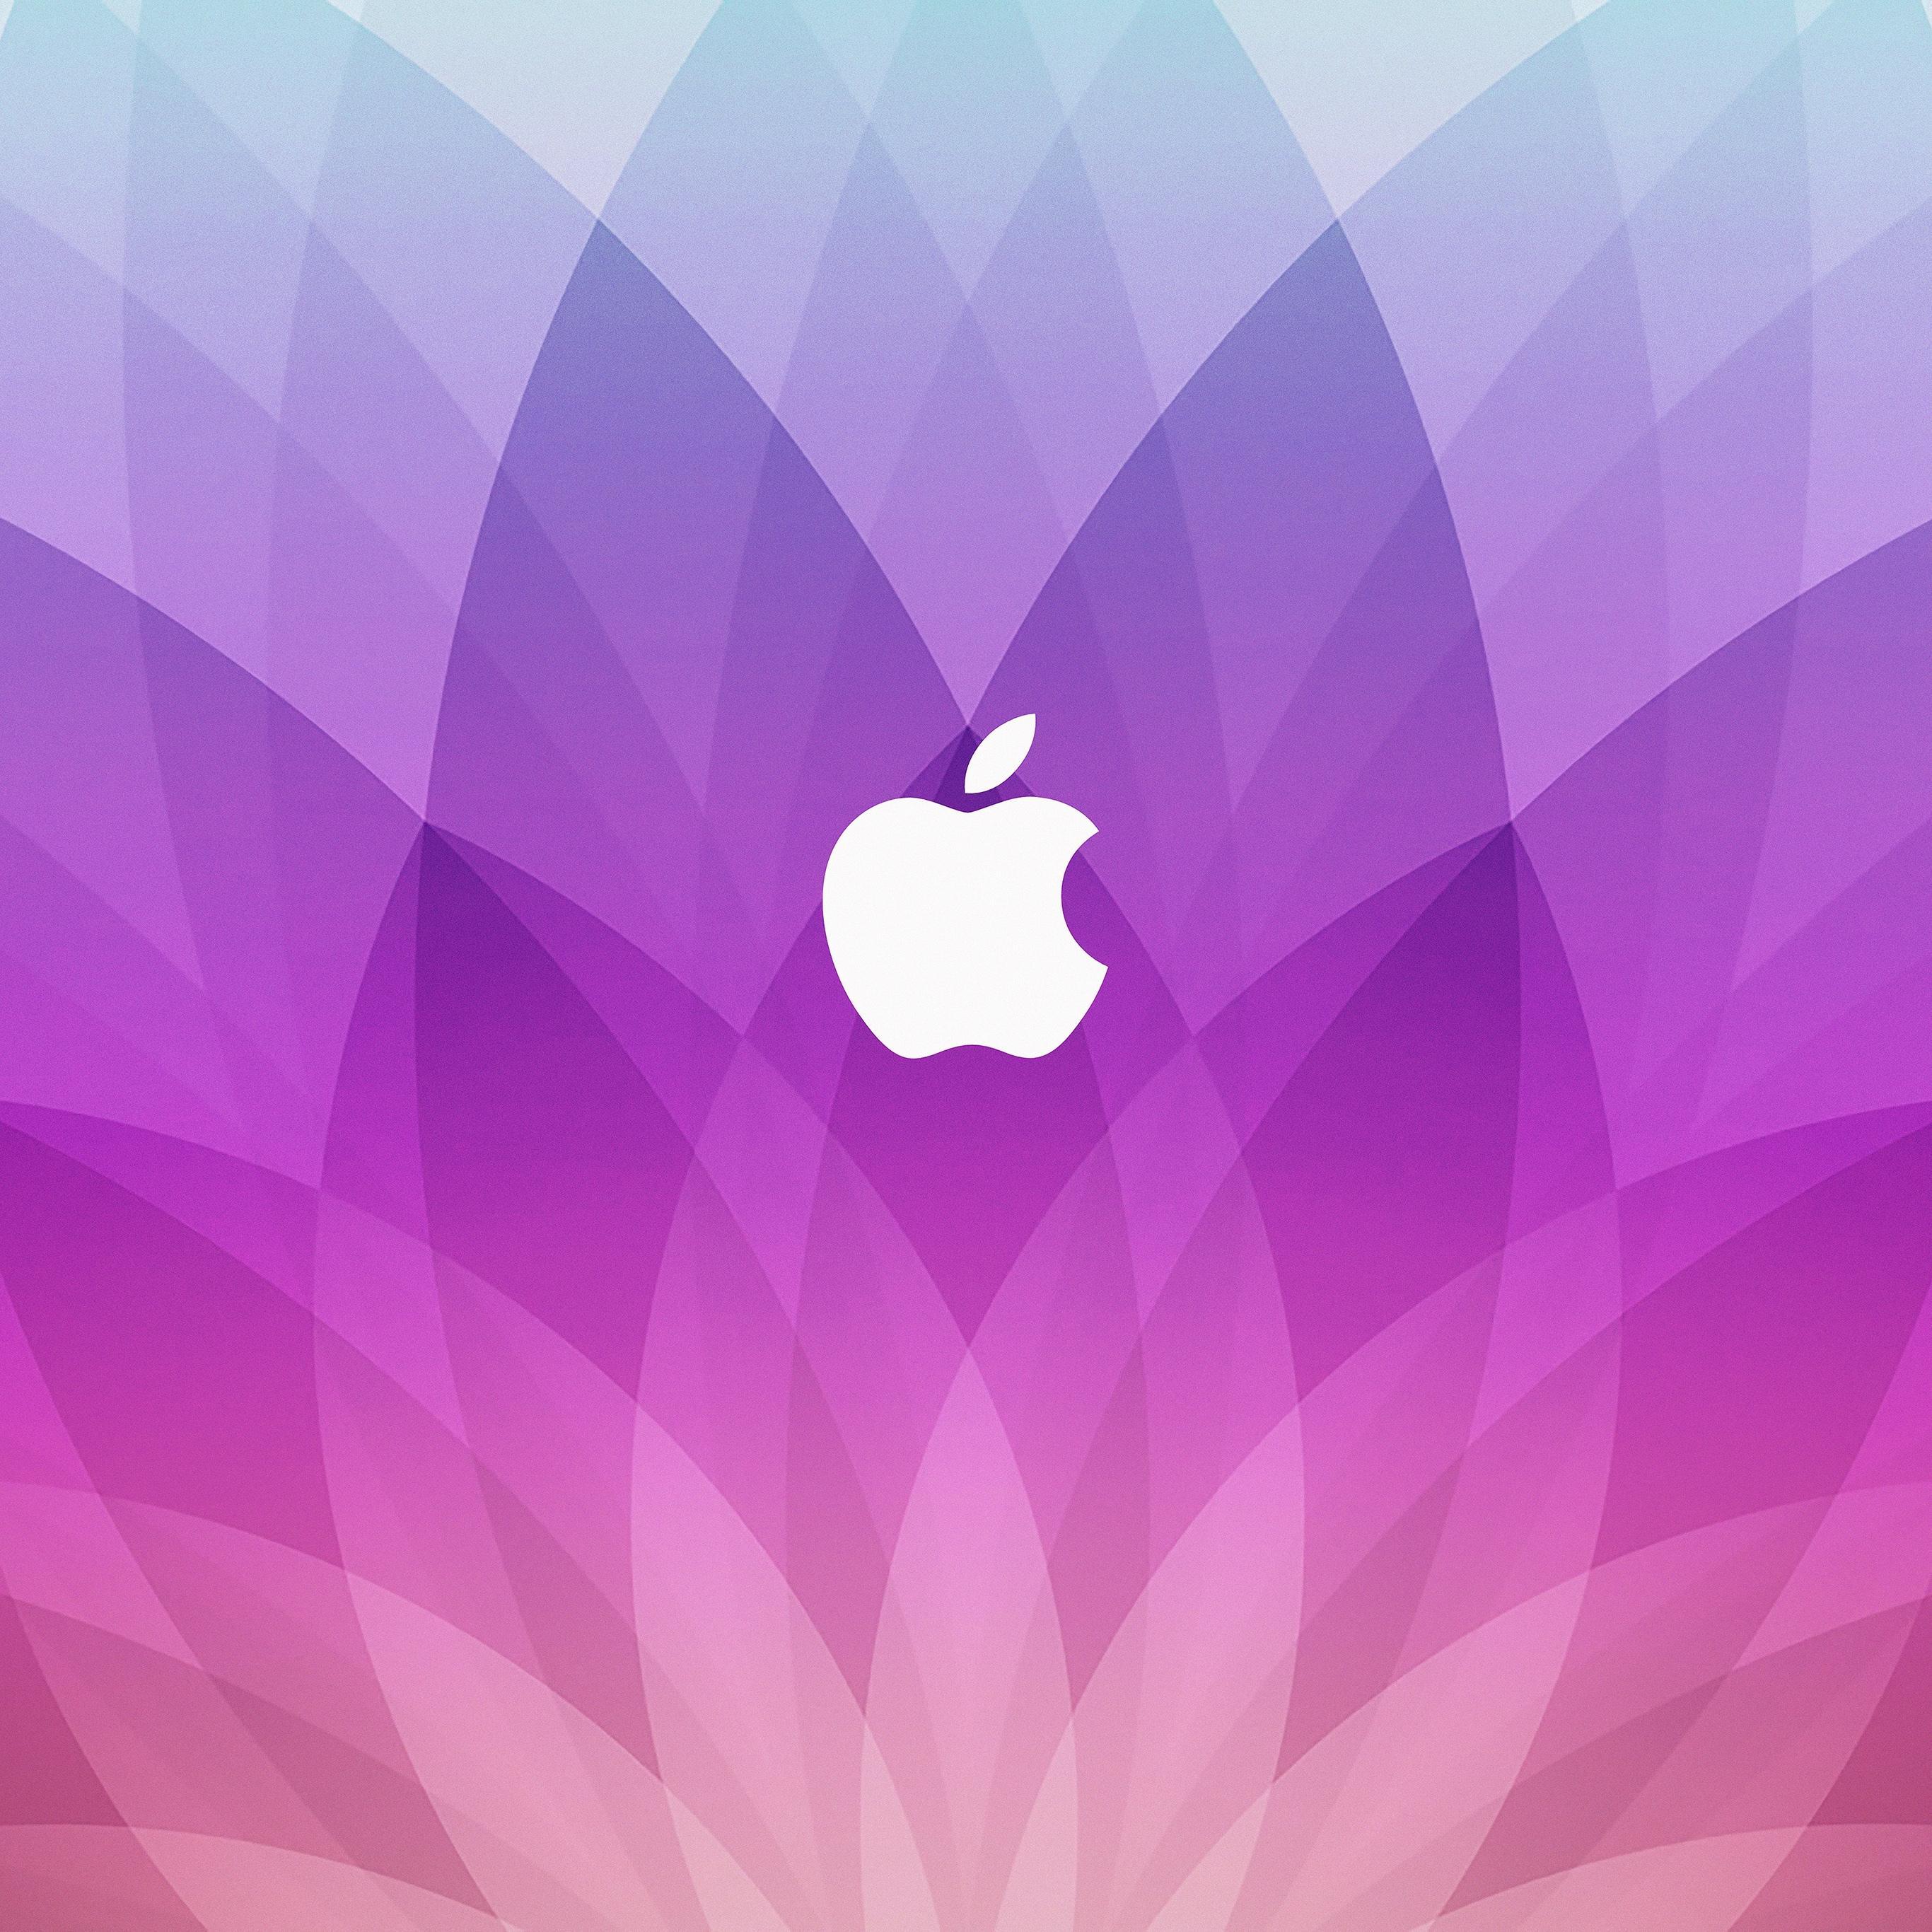 Wallpaper of the week: Apple logo